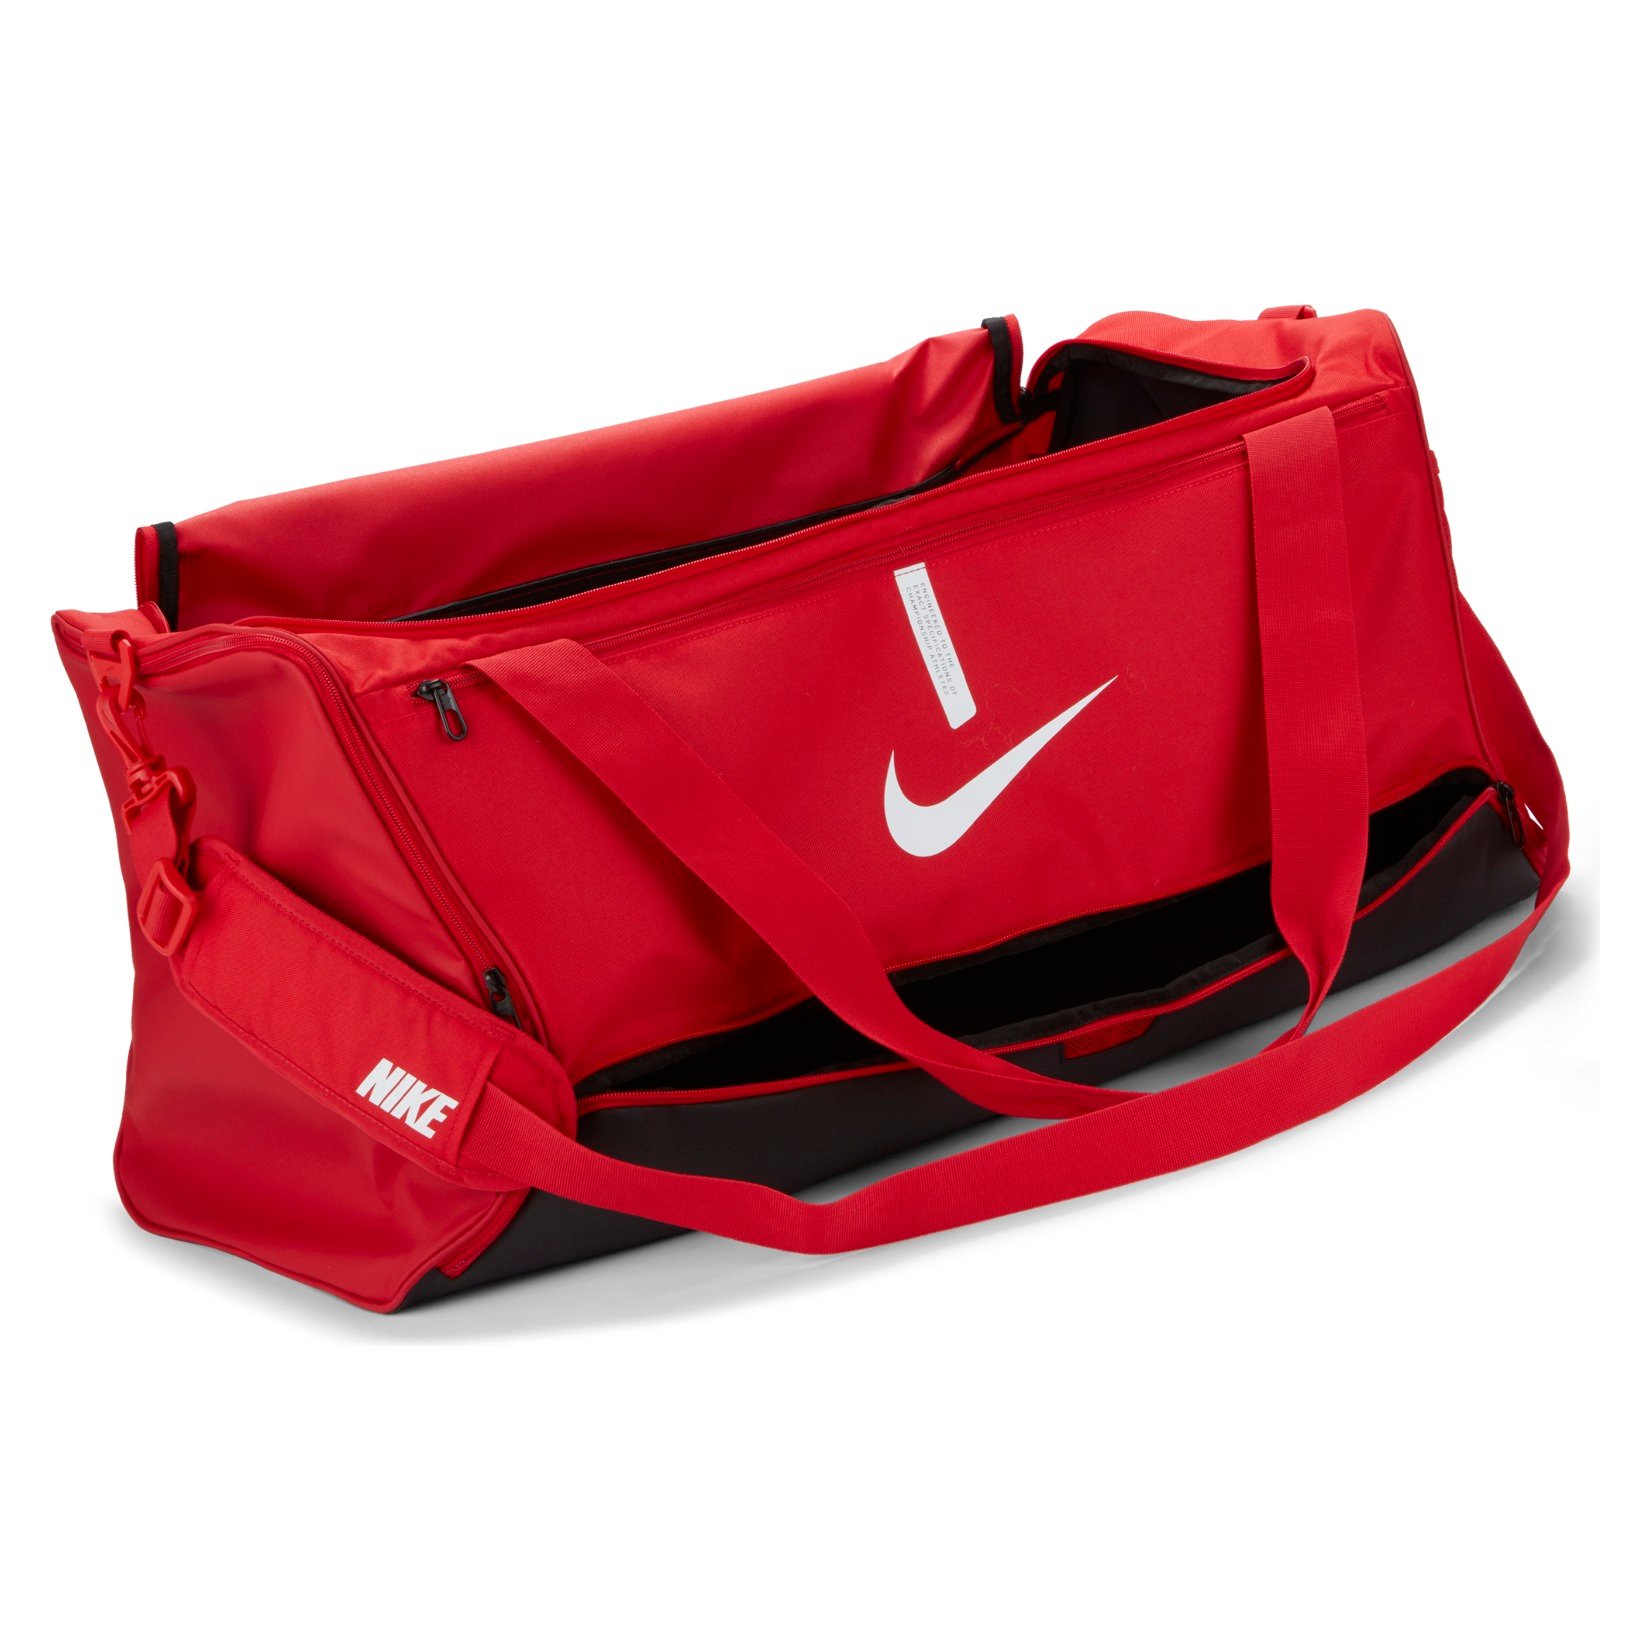 Nike Academy Team Duffel Bag (Large) University Red-Black-White